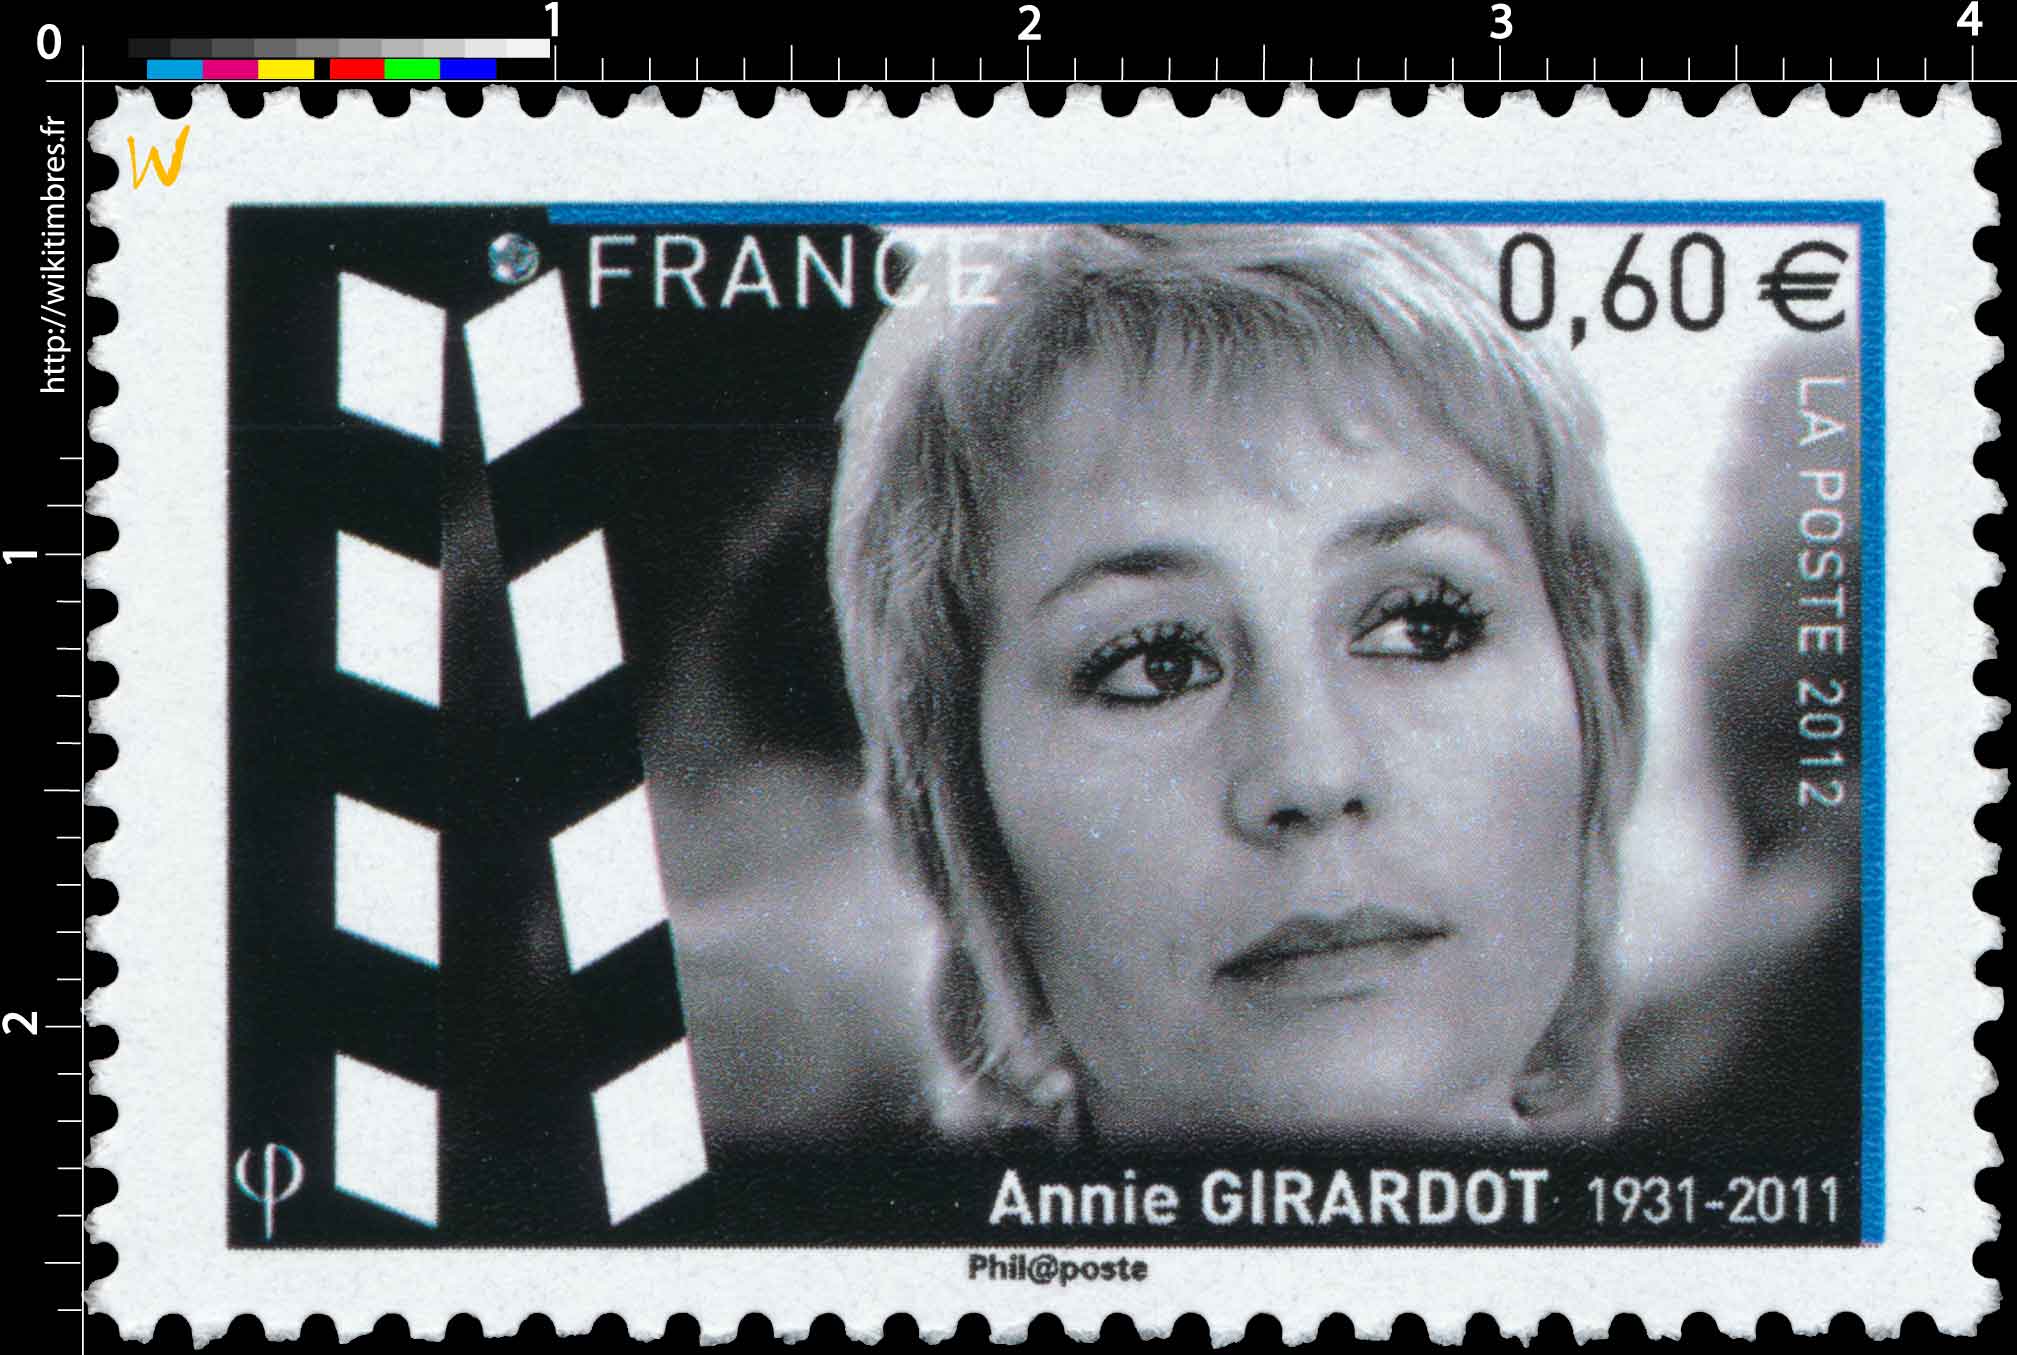 Annie Girardot 1931-2011